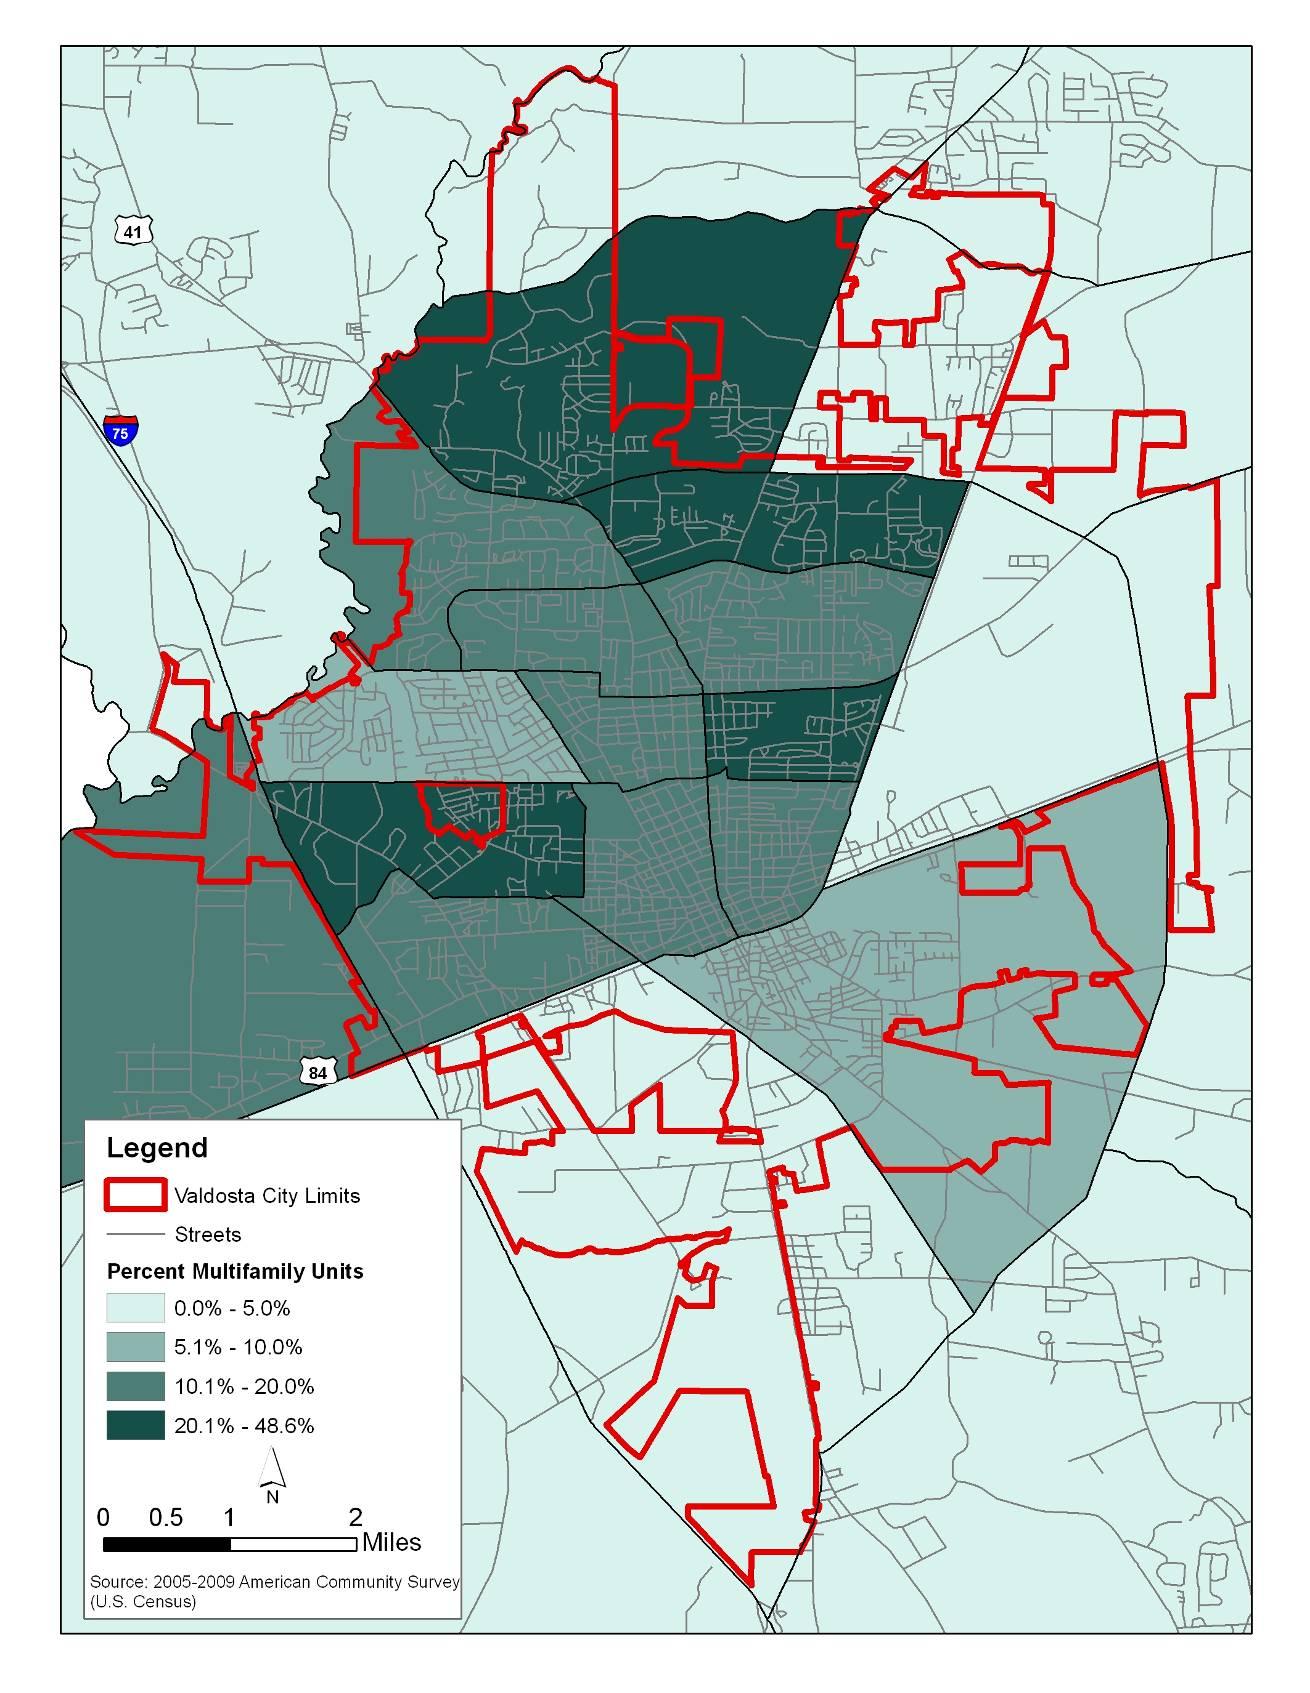 P 22 Map 1.10 Percent Multifamily Housing Units 2005-2009